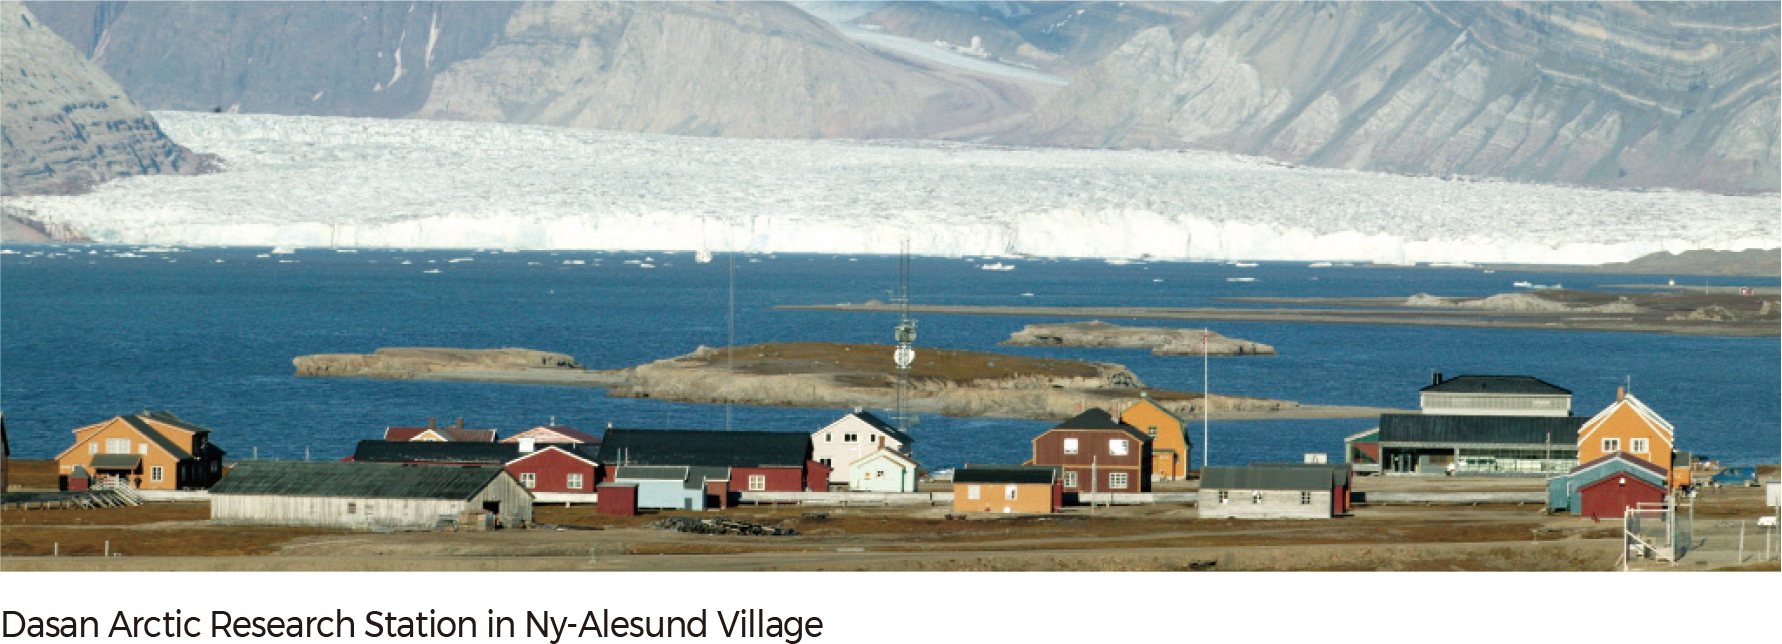 Dasan Arctic Research Station in Ny-Alesund Village